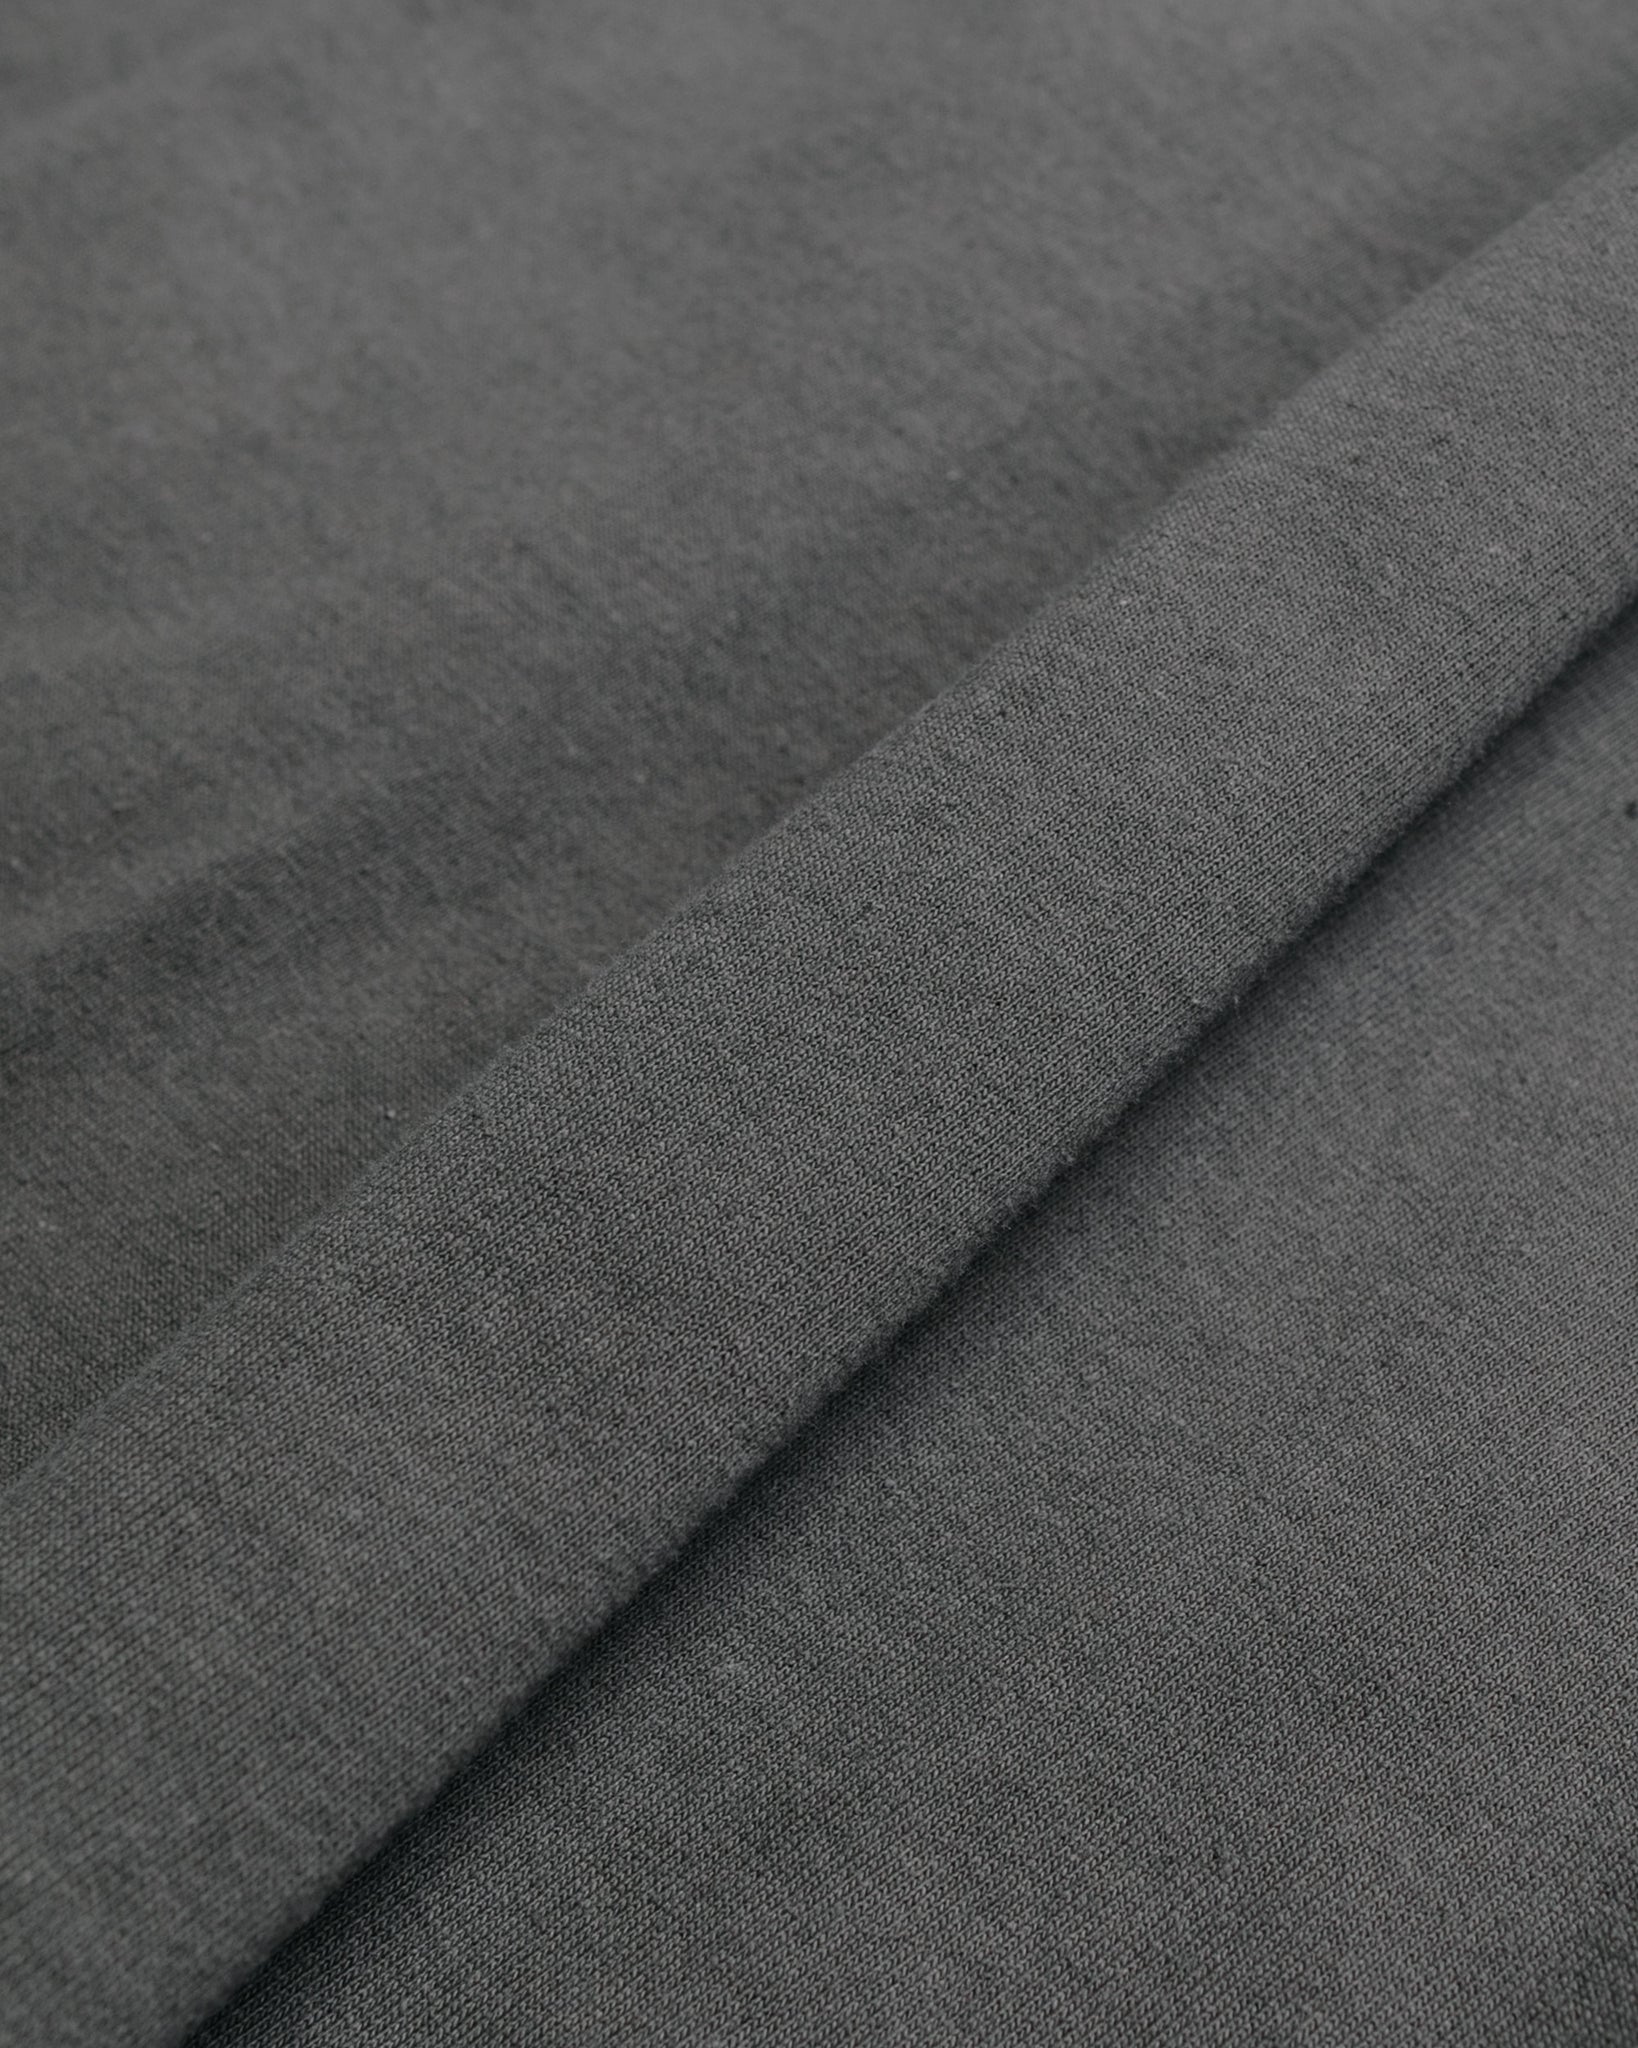 Randy's Garments Long-Sleeve Pocket Tee Grey model fabric